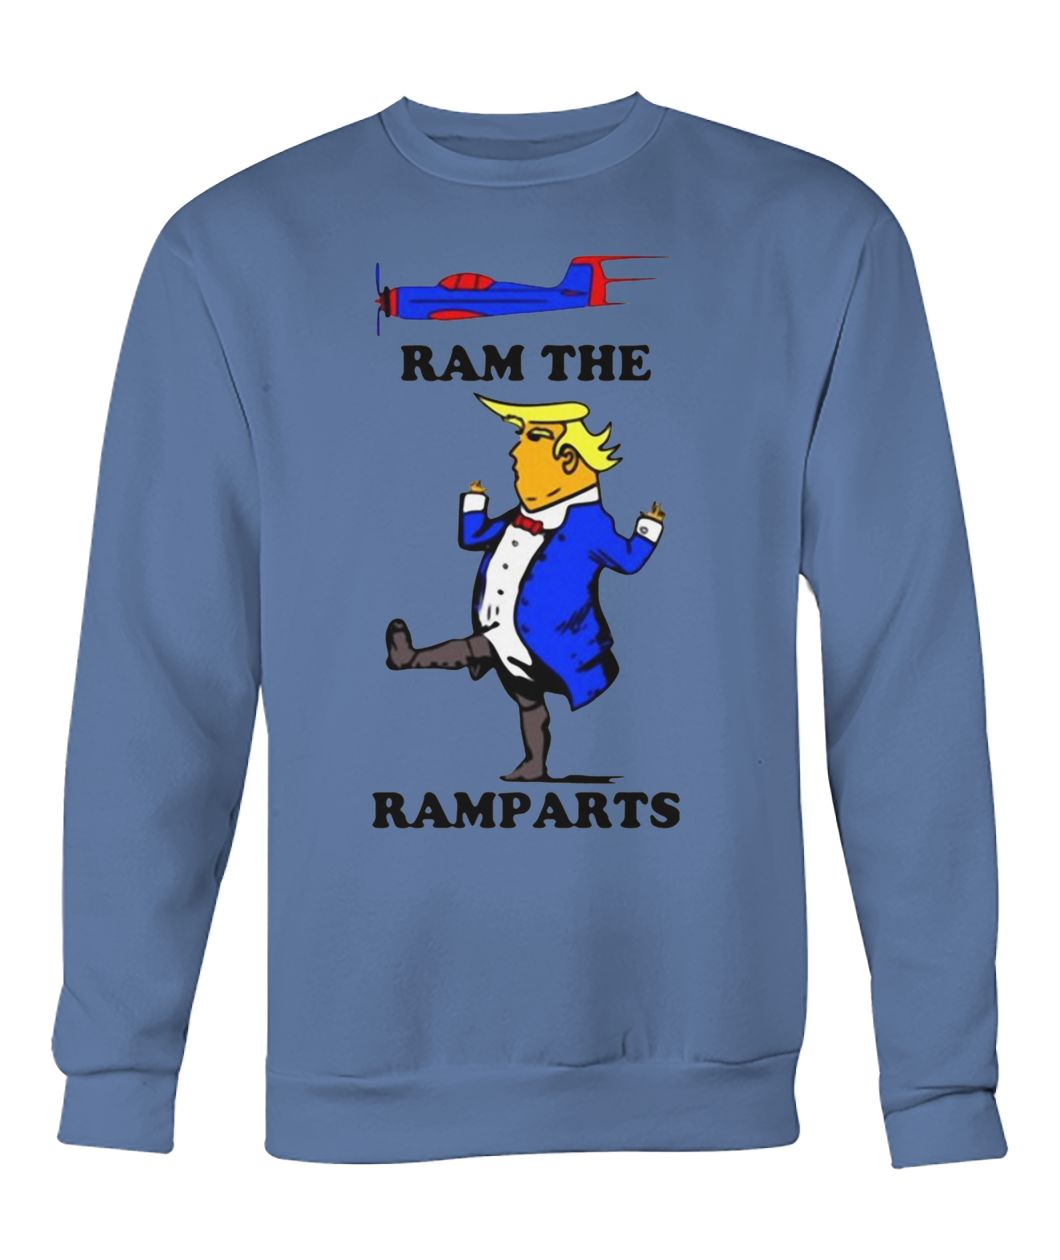 Donald trump ram the ramparts crew neck sweatshirt